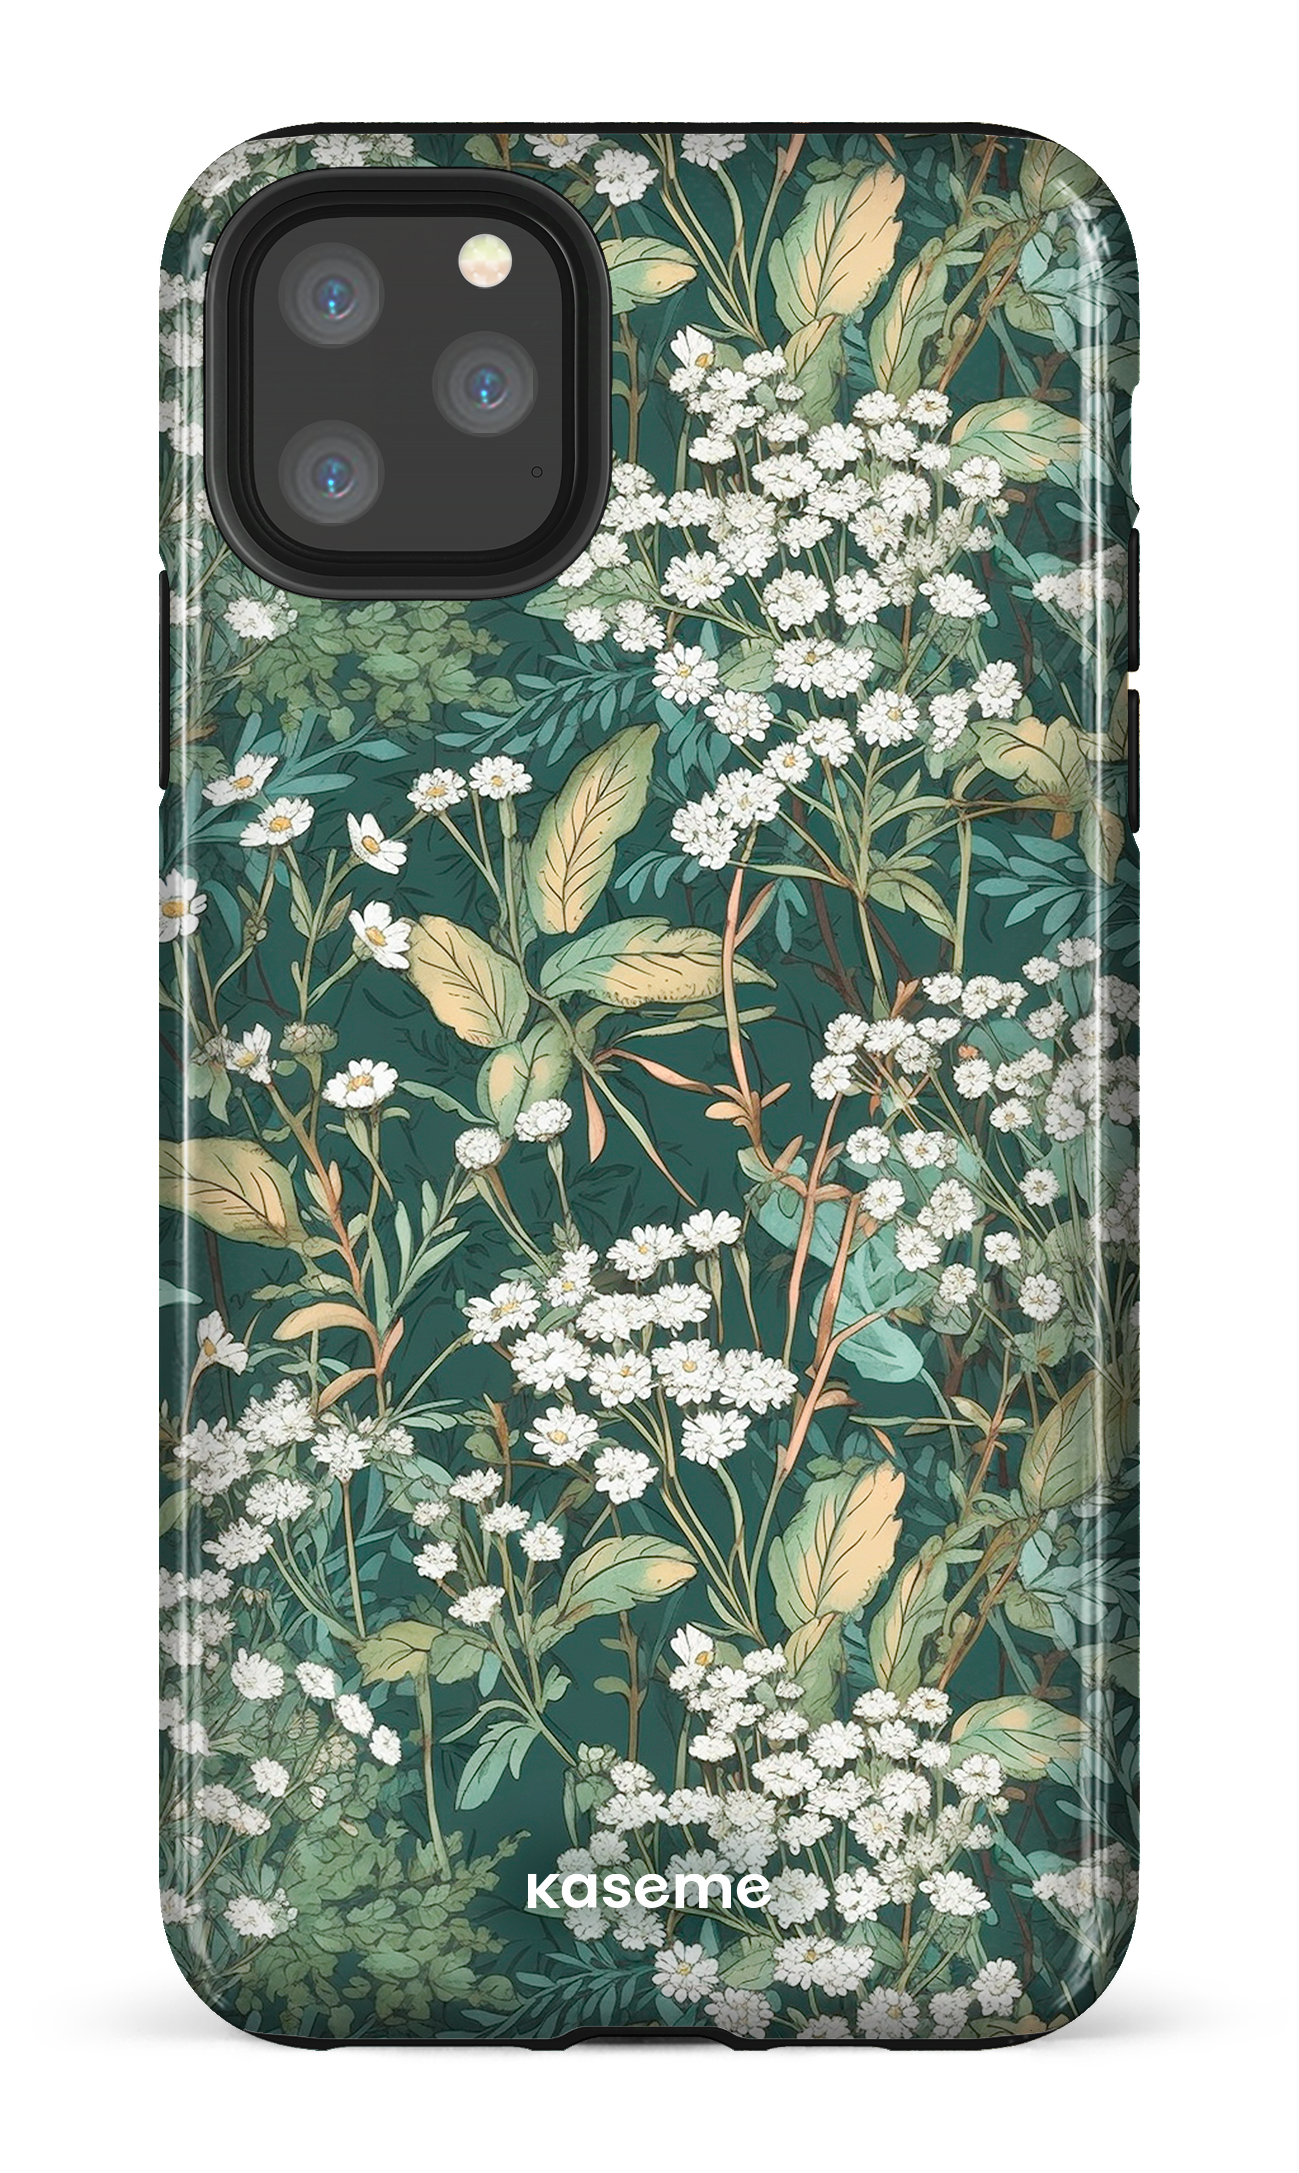 Untamed blossom - iPhone 11 Pro Max